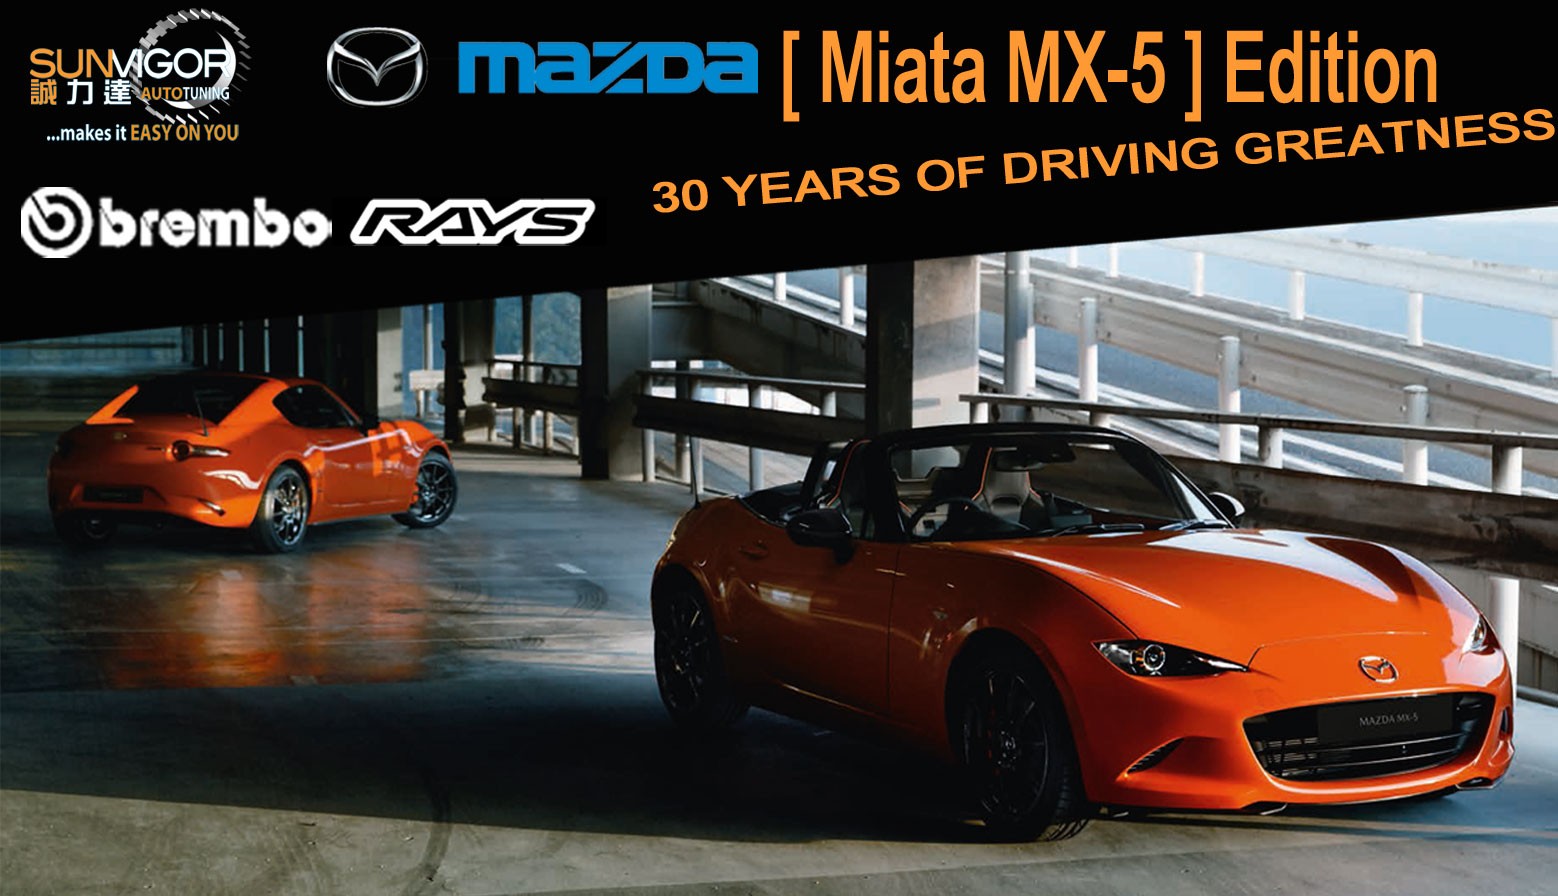 MX-5 Miata 30th Anniversary Edition Geunine Parts